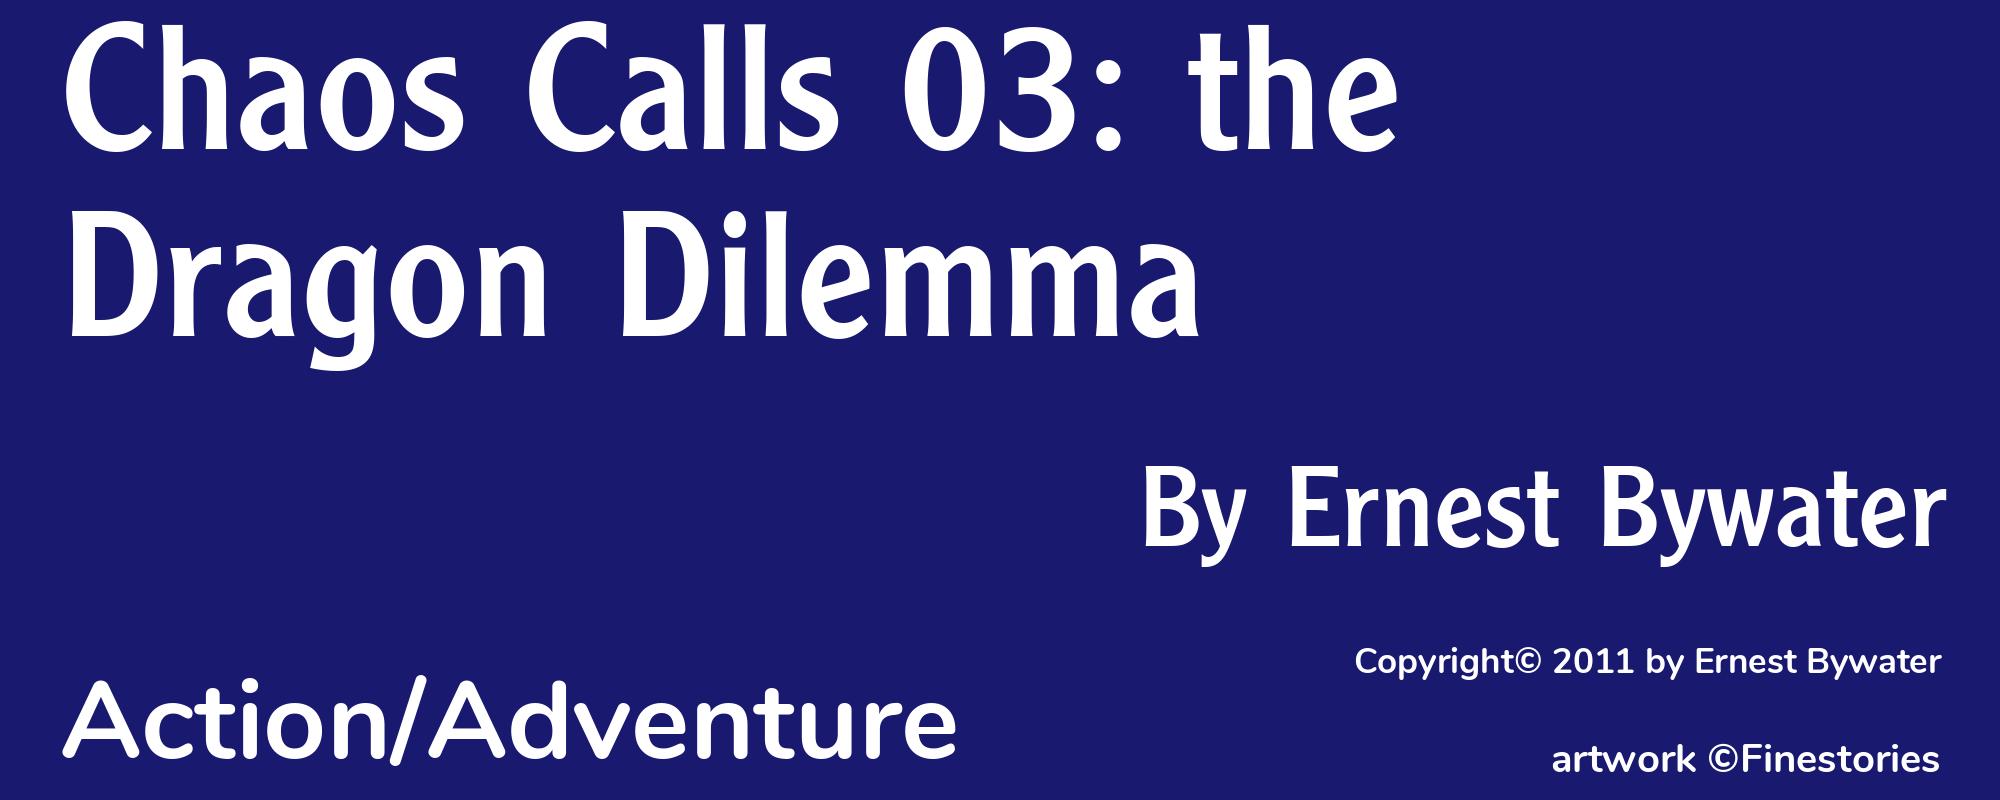 Chaos Calls 03: the Dragon Dilemma - Cover